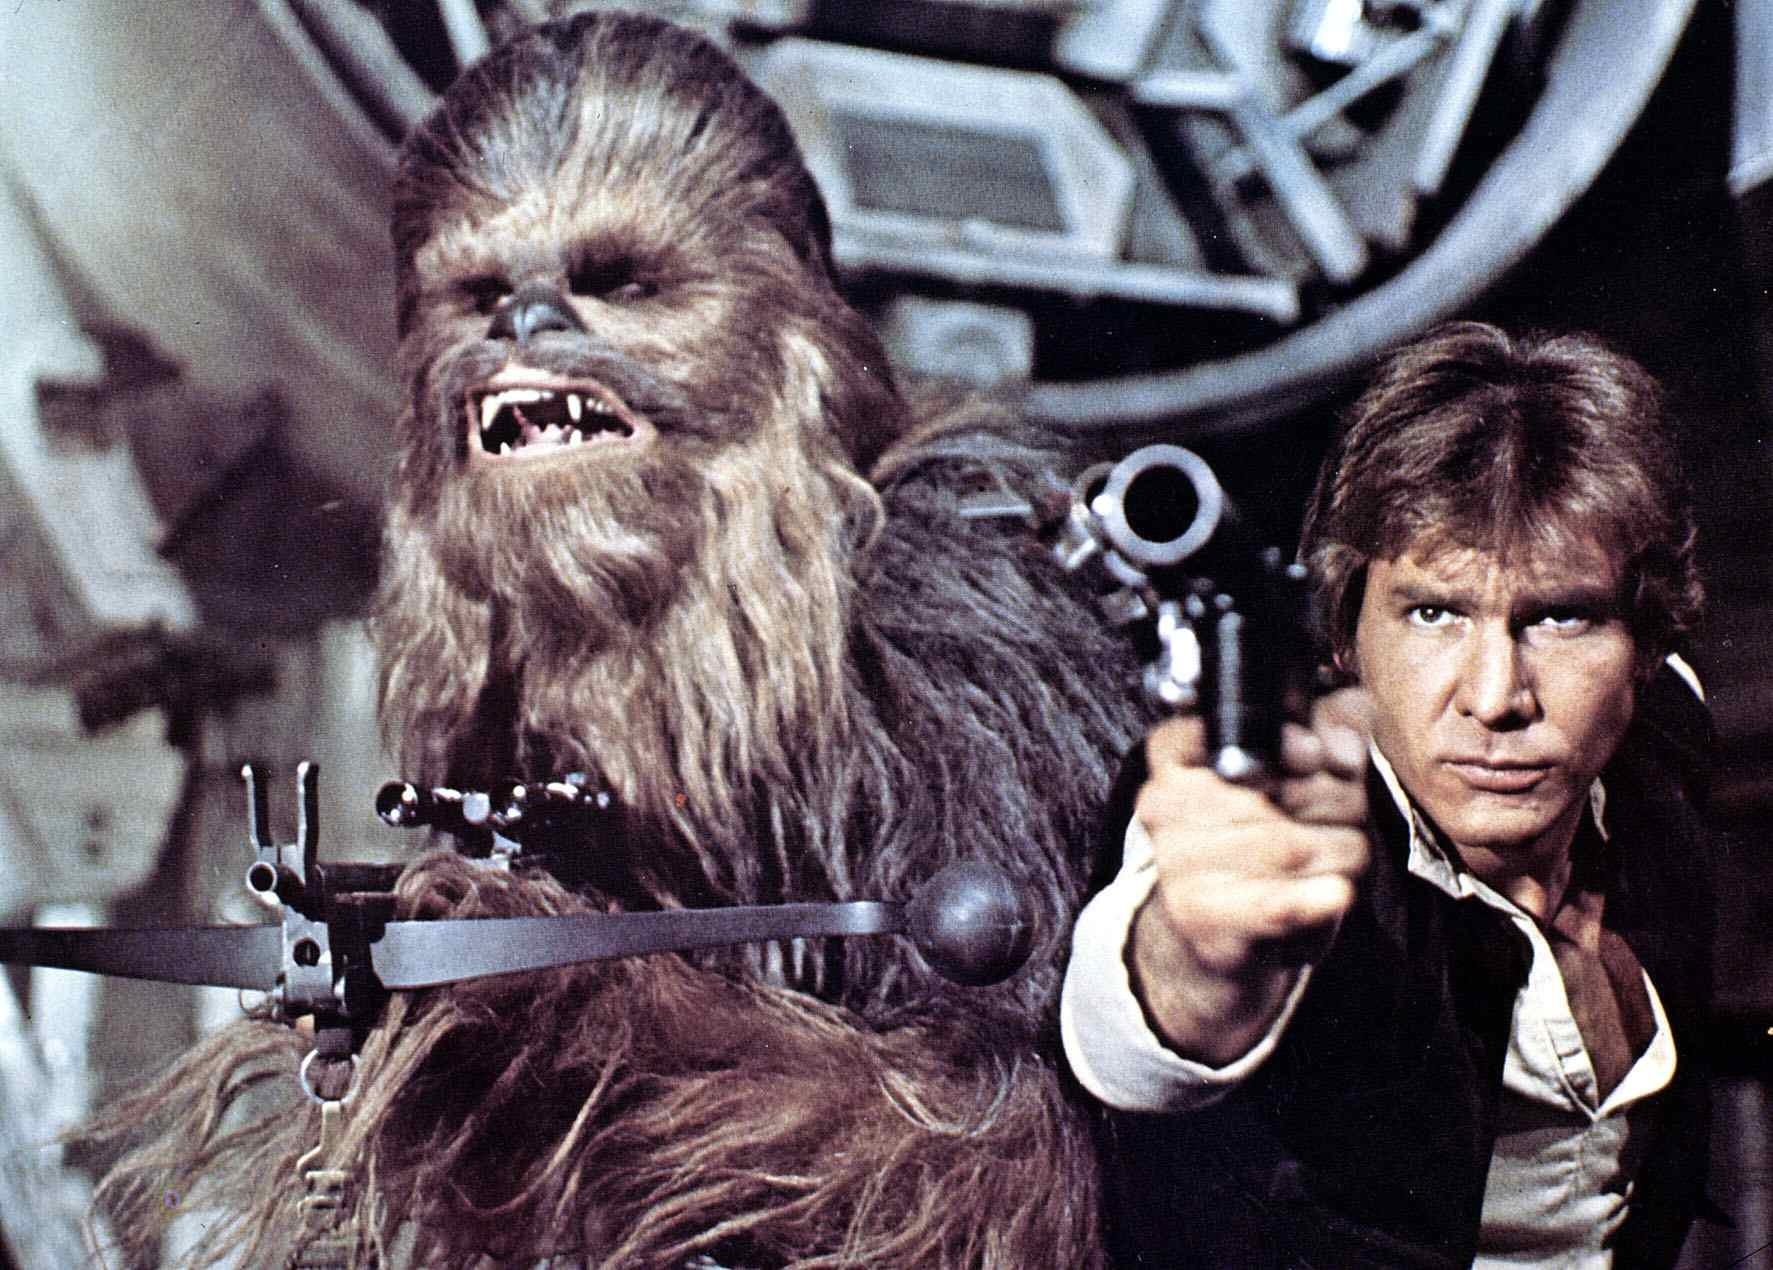 Chewbacca and Han Solo in a fight scene